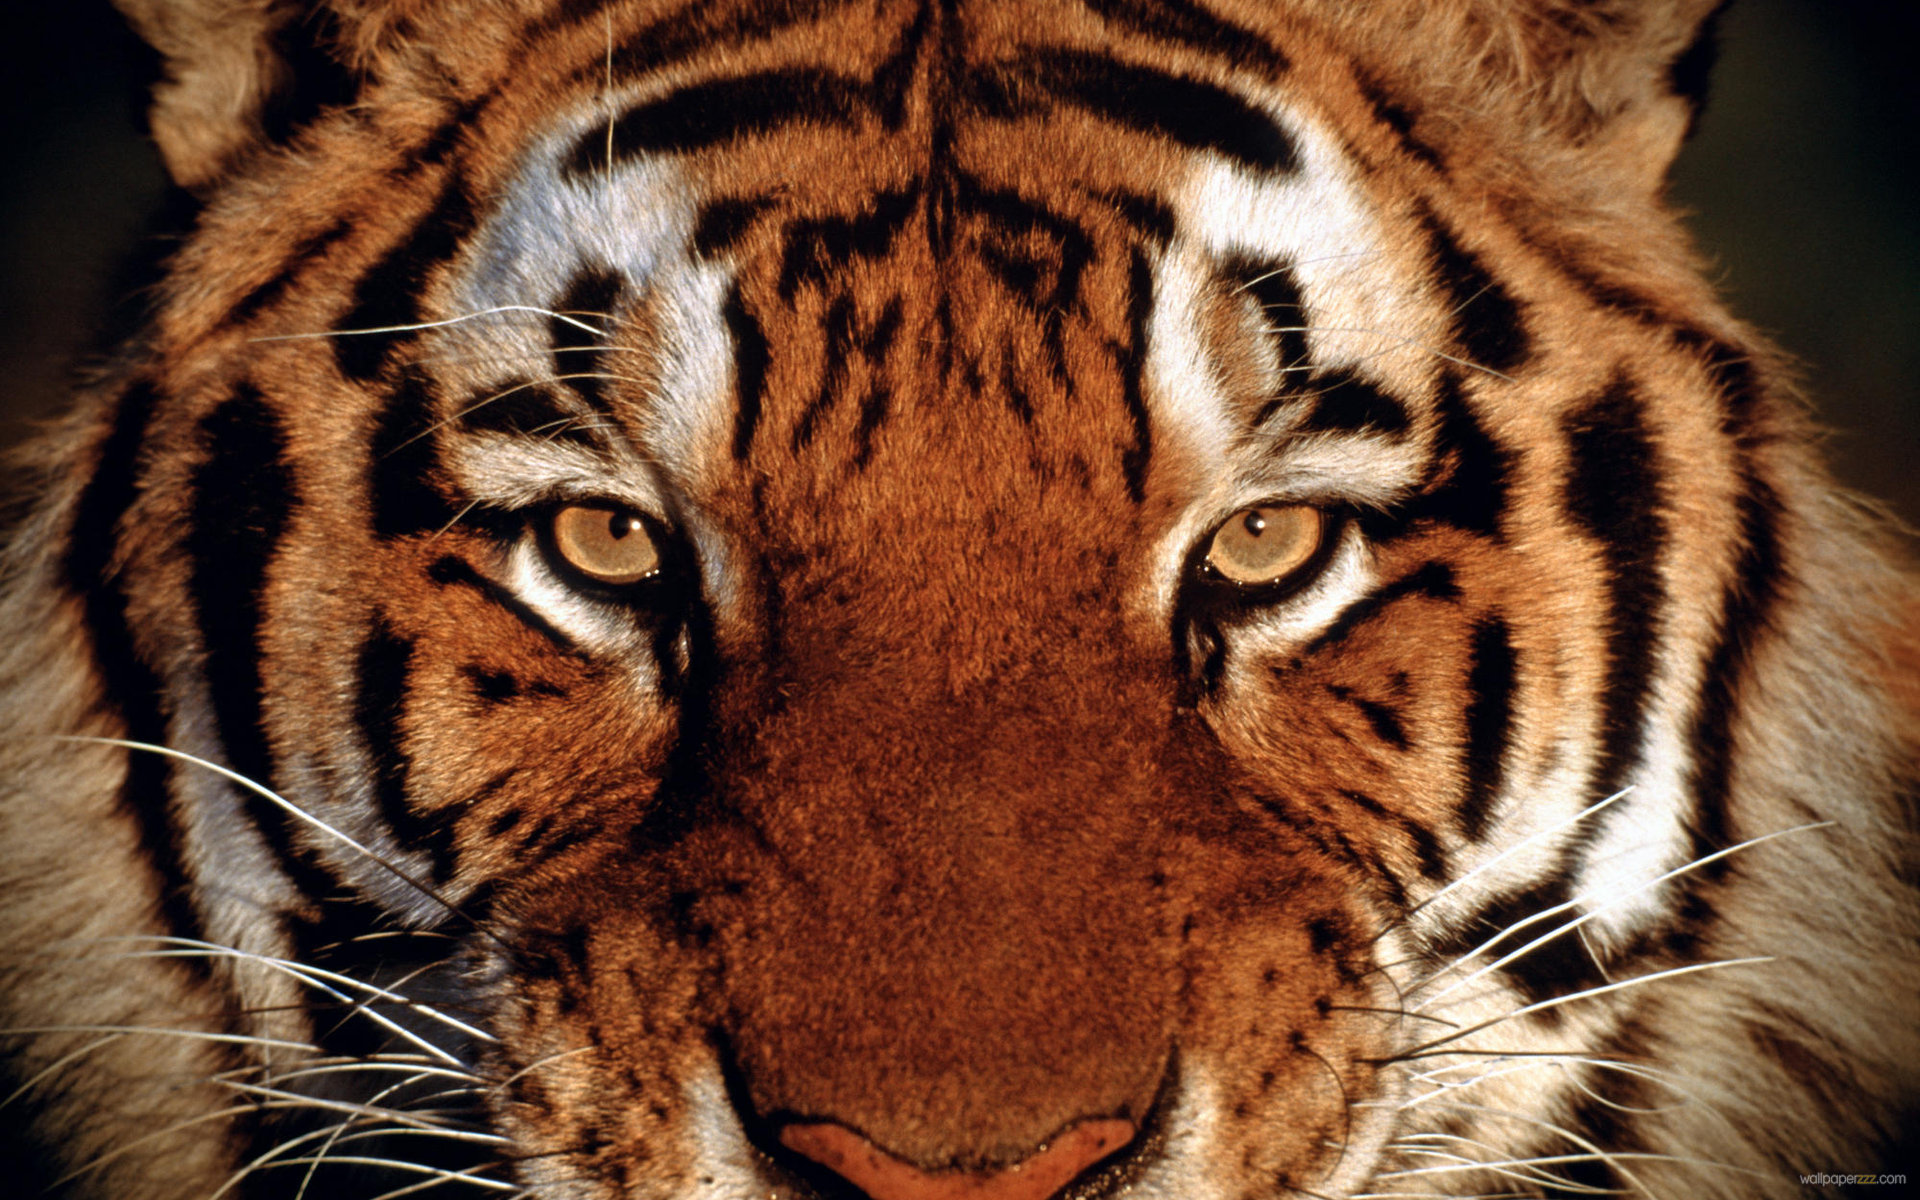 Tiger face Wallpaper 4K, Predator, Big cat, Wild animal, #2674